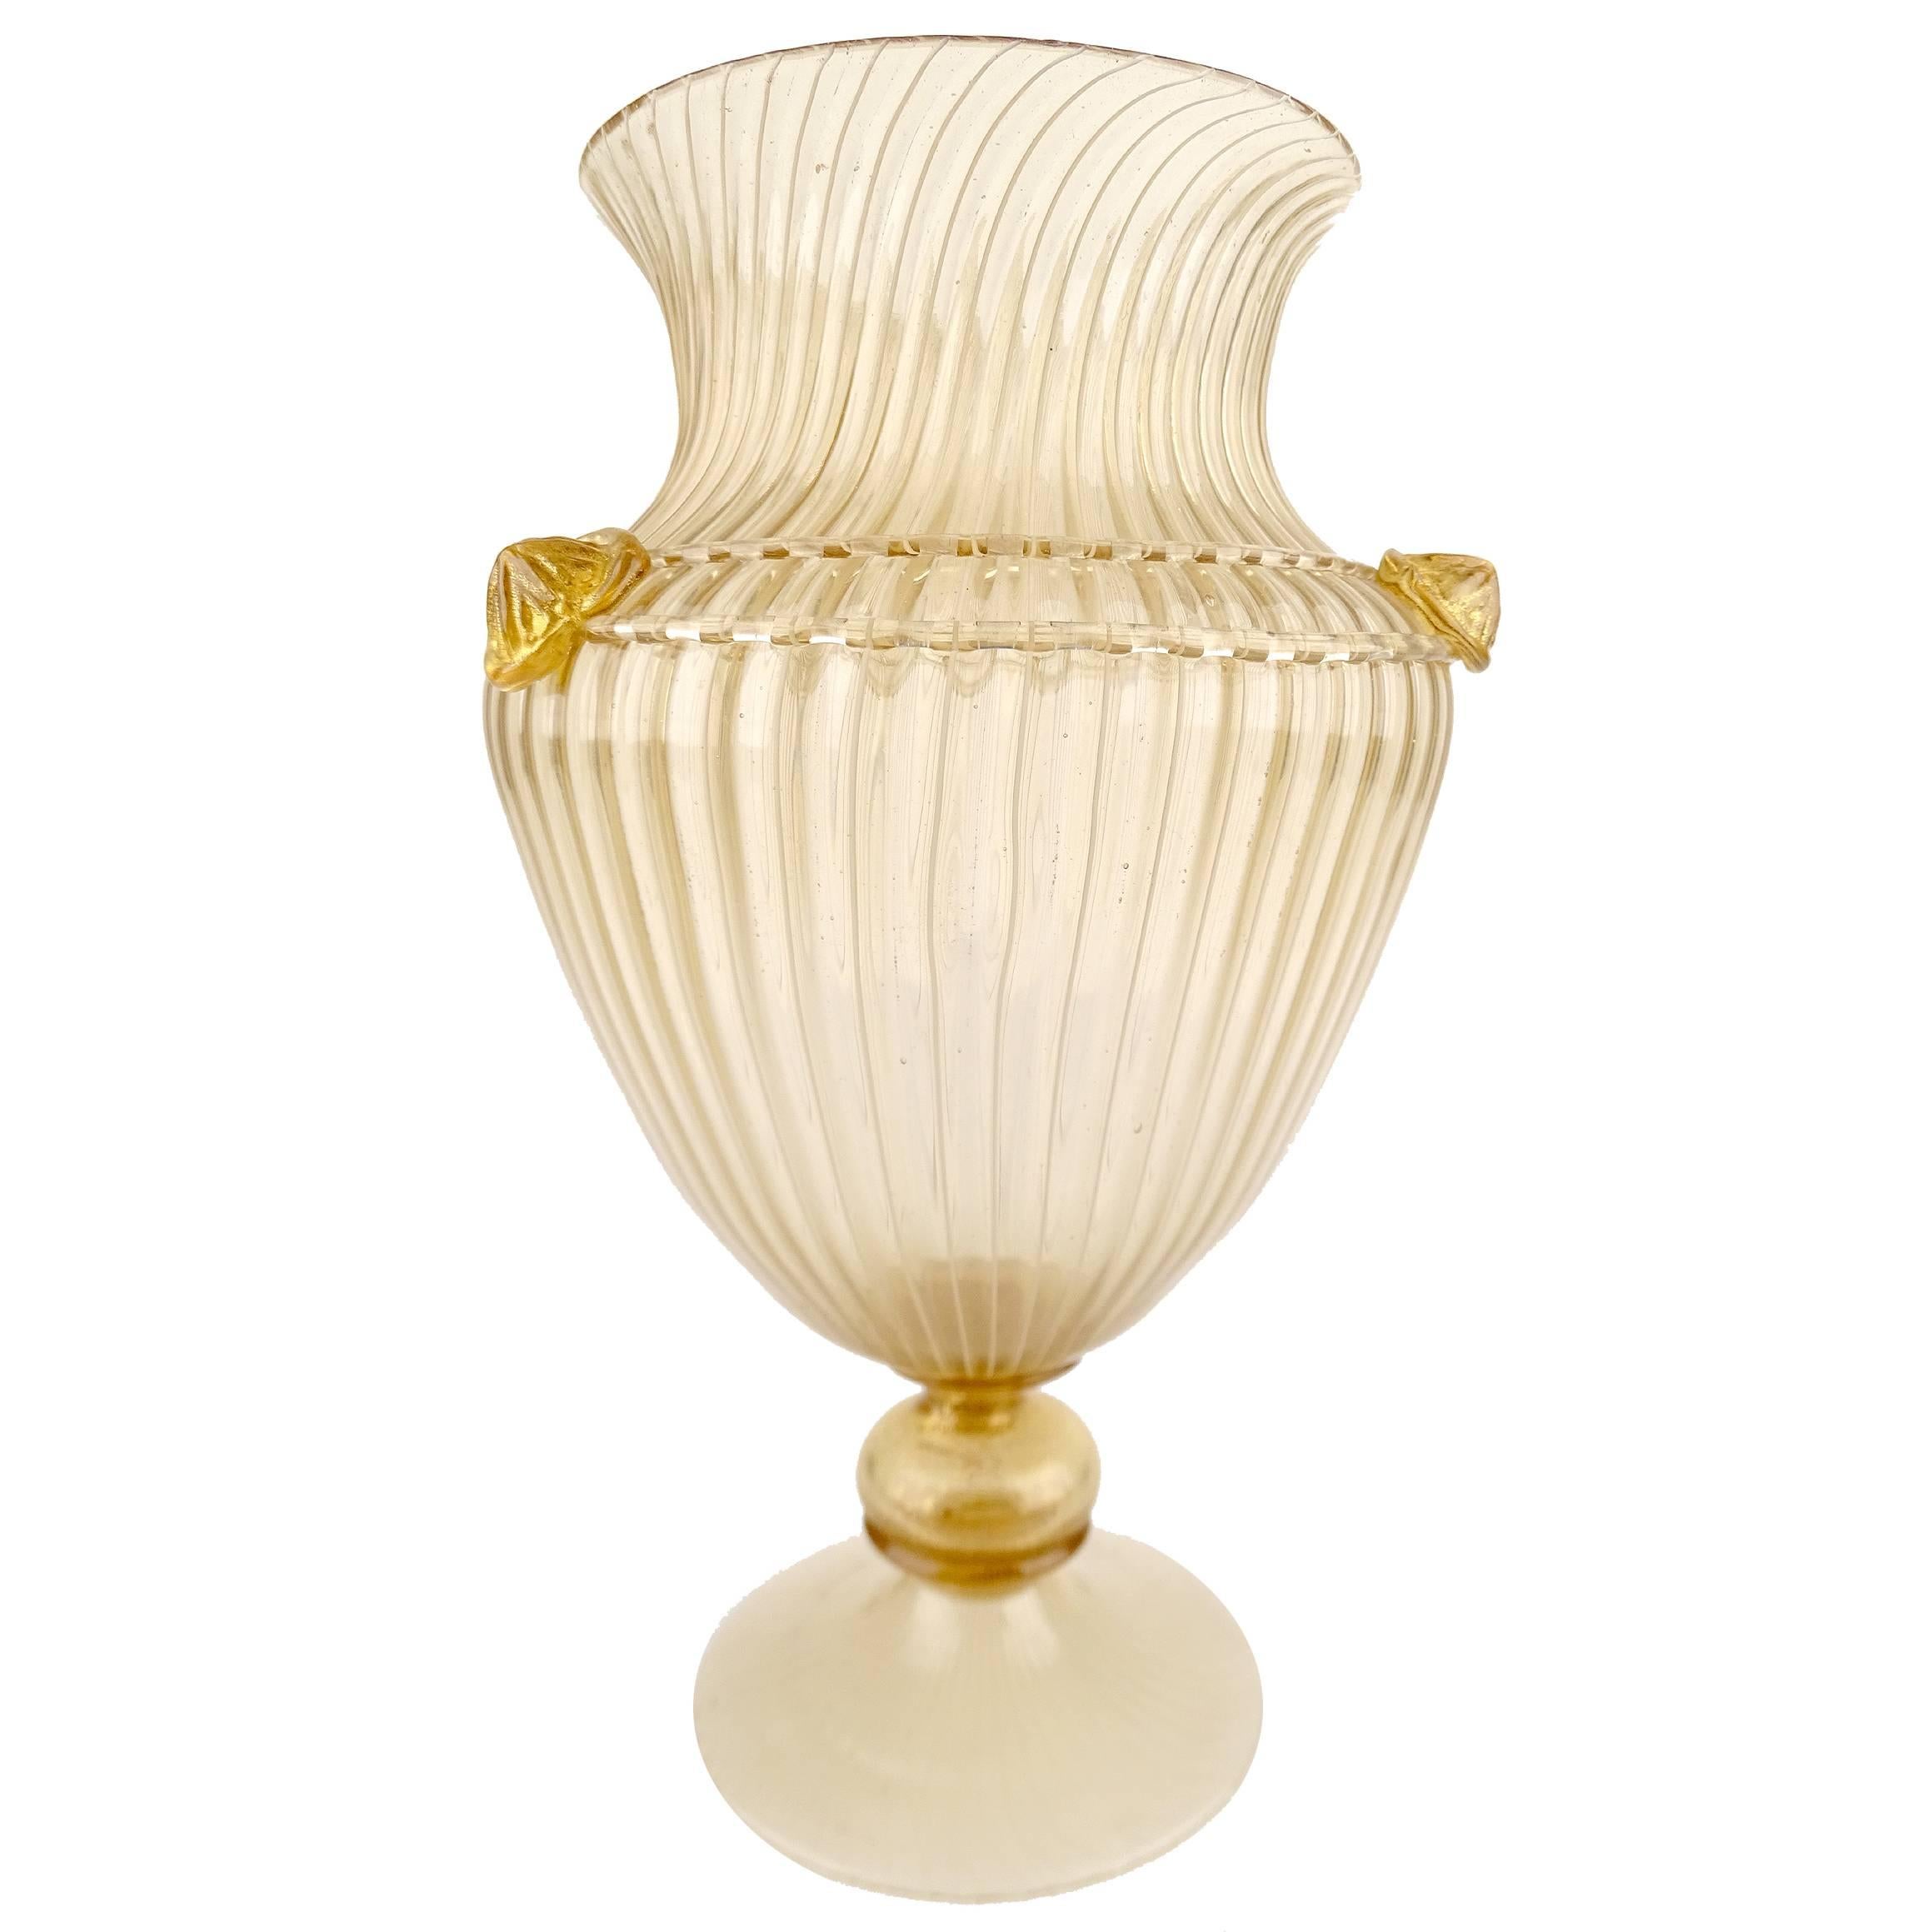 1950s  Barovier Toso Murano Glass and Gold Vase Antique Amphora Design italian